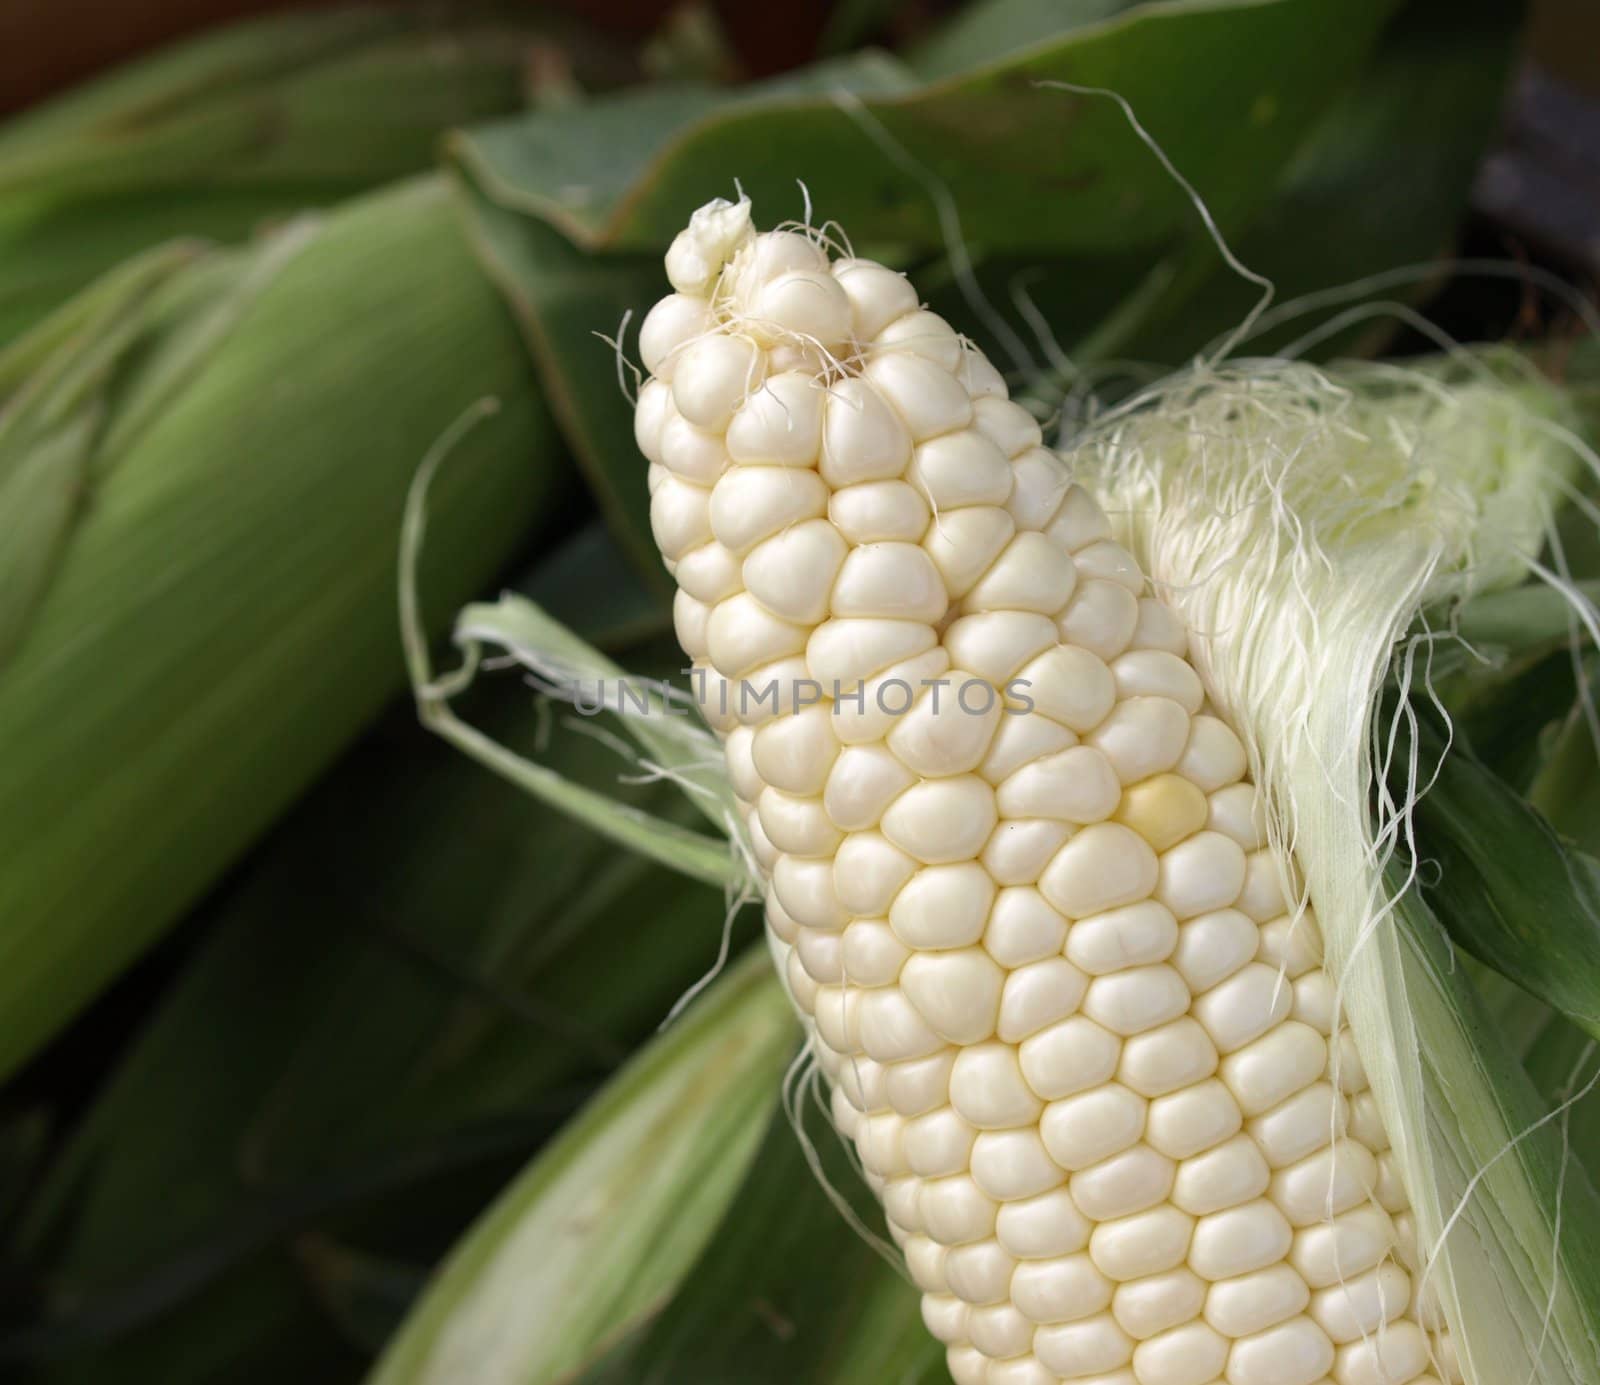 Ear of corn by northwoodsphoto